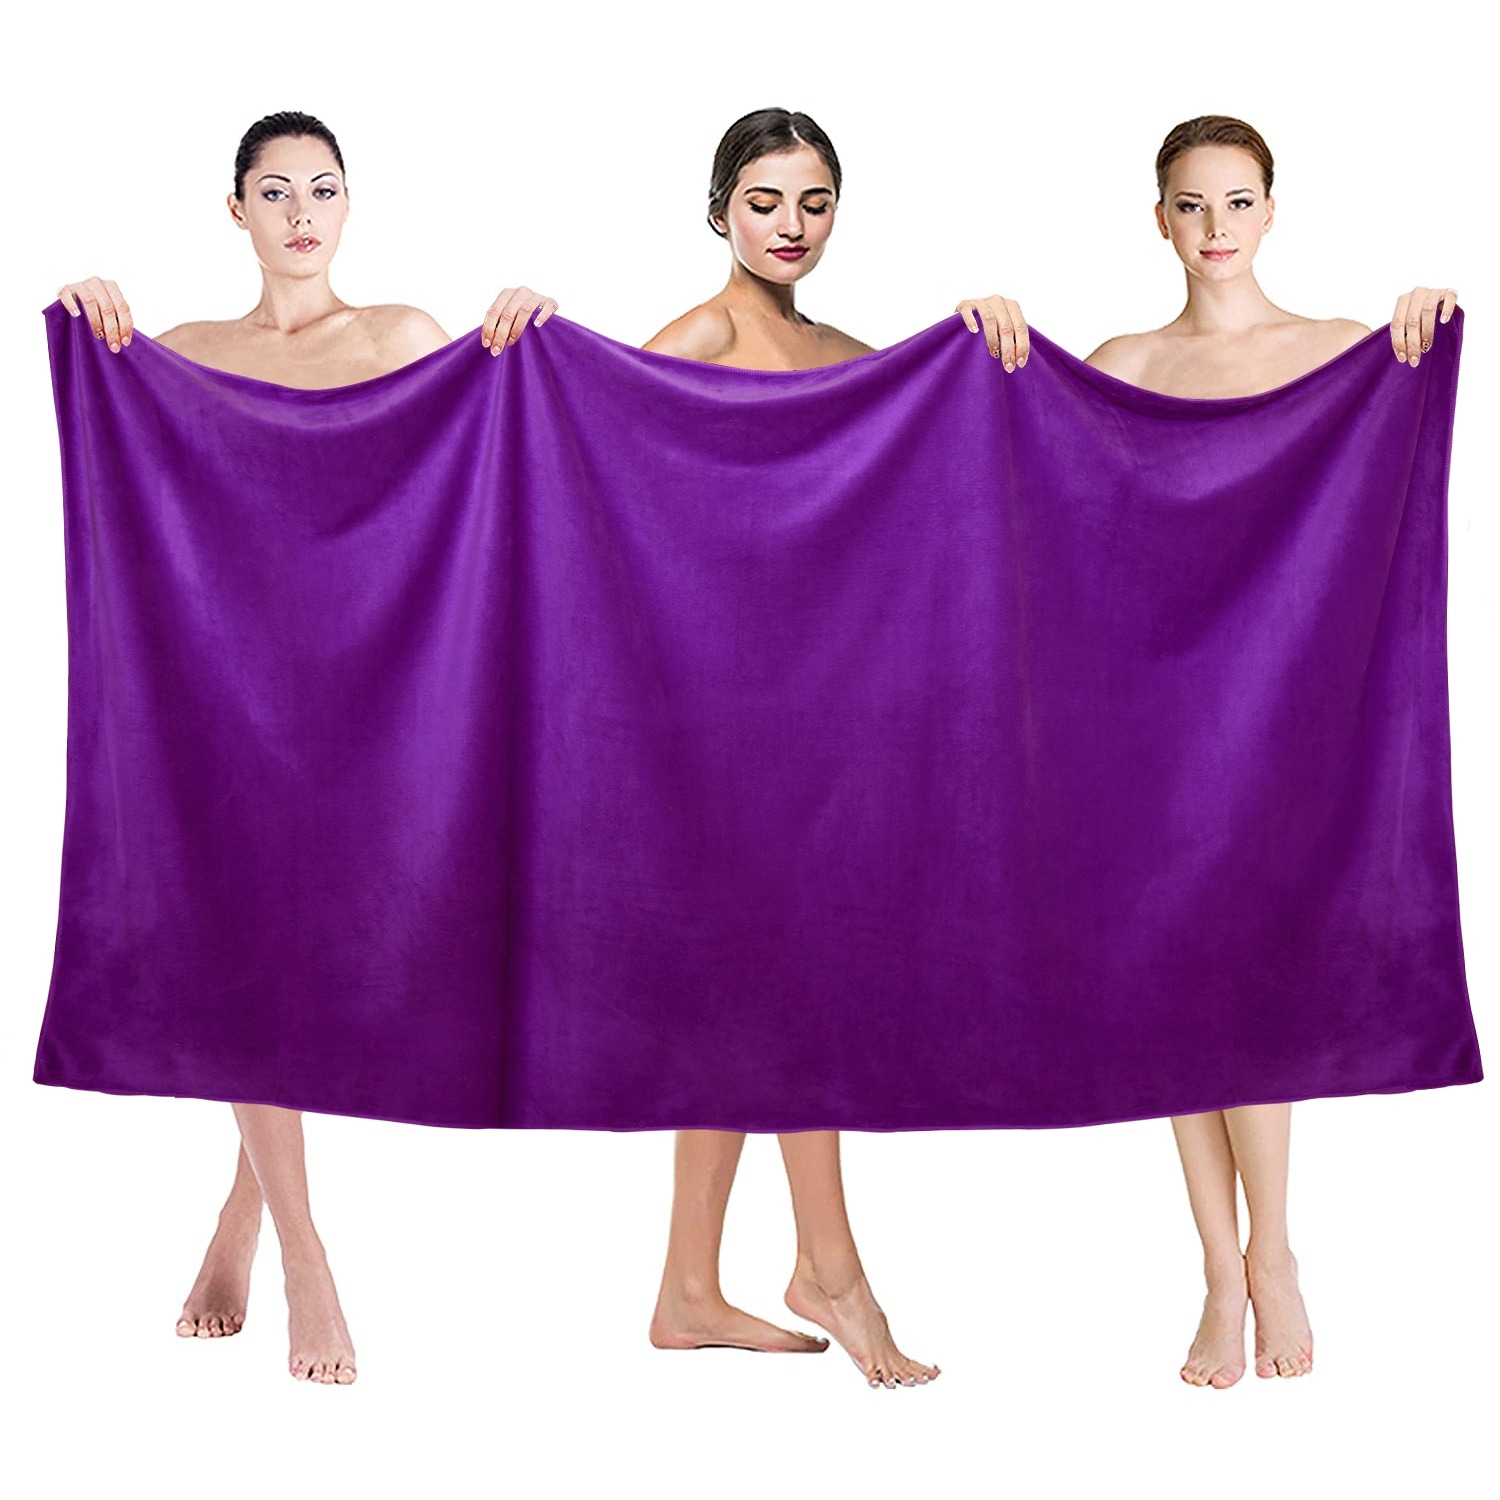 American Bath Towels Bath Sheets 40x80 Clearance, 100% Cotton Extra Large  Bath Towel, Oversized Turkish Bath Towel for Bathroom, Purple